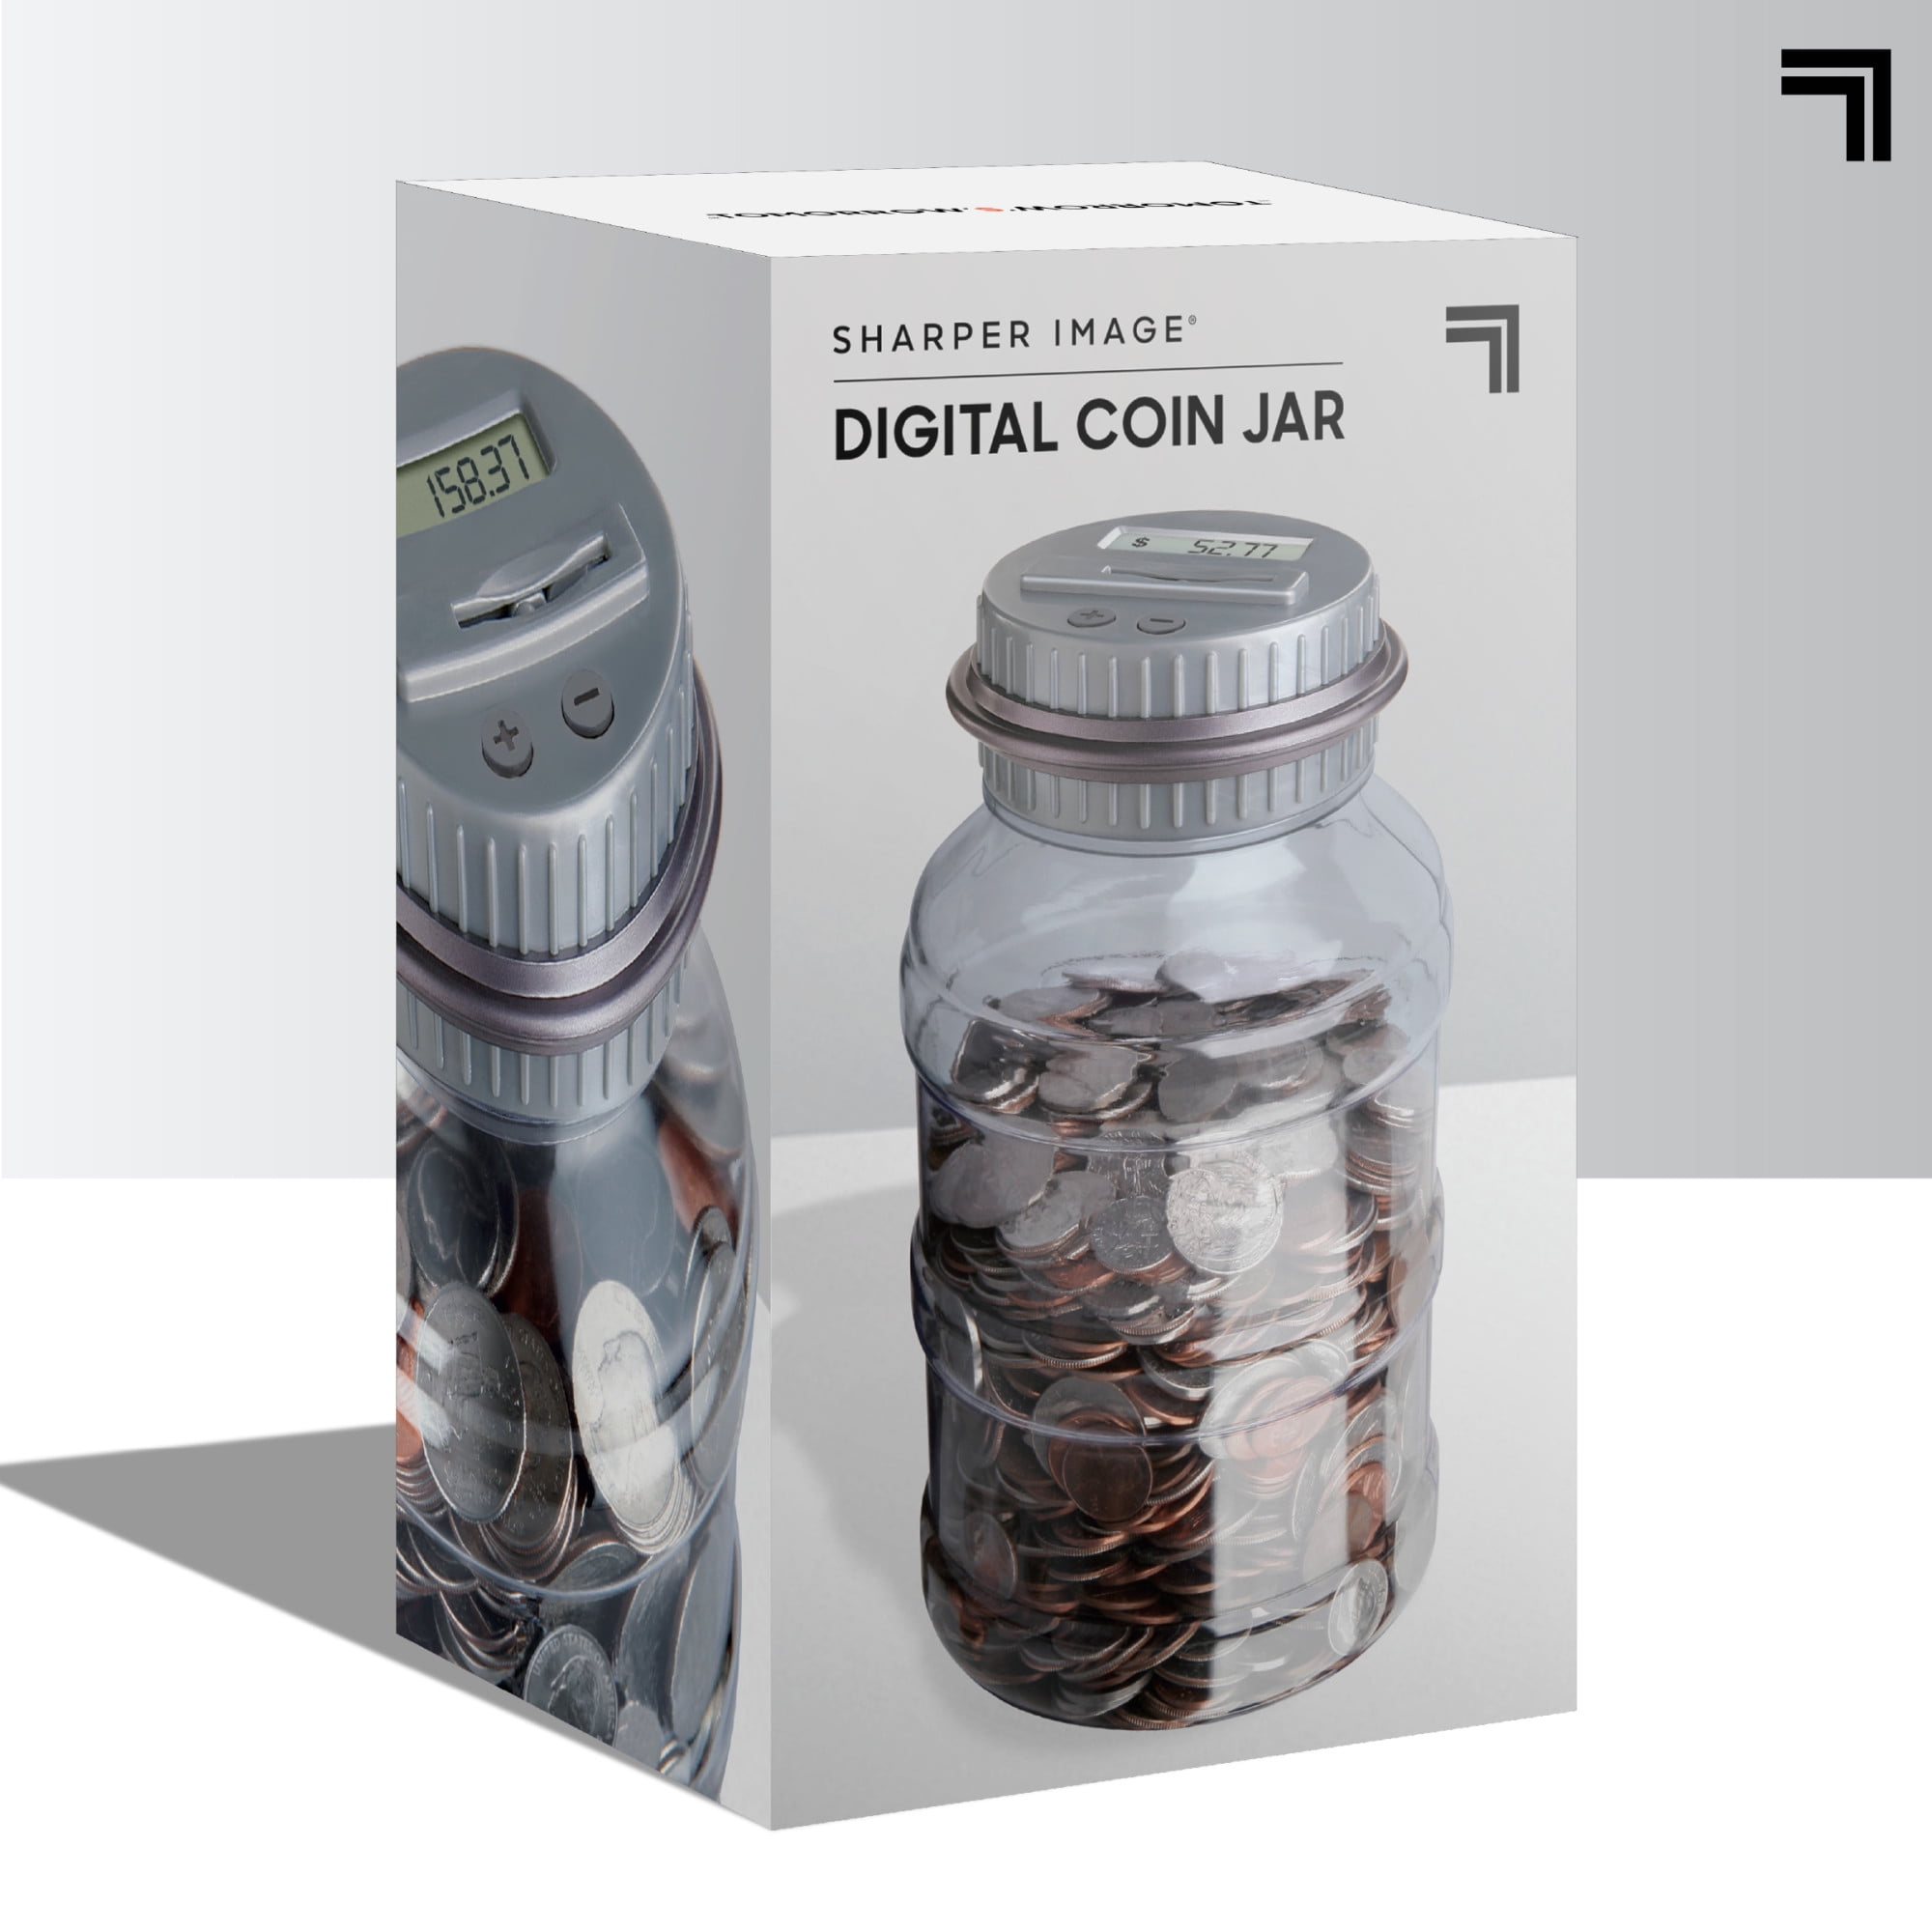 NEW Lid Color Varies SHARPER IMAGE Digital Counting Money Jar Piggy Bank LCD 